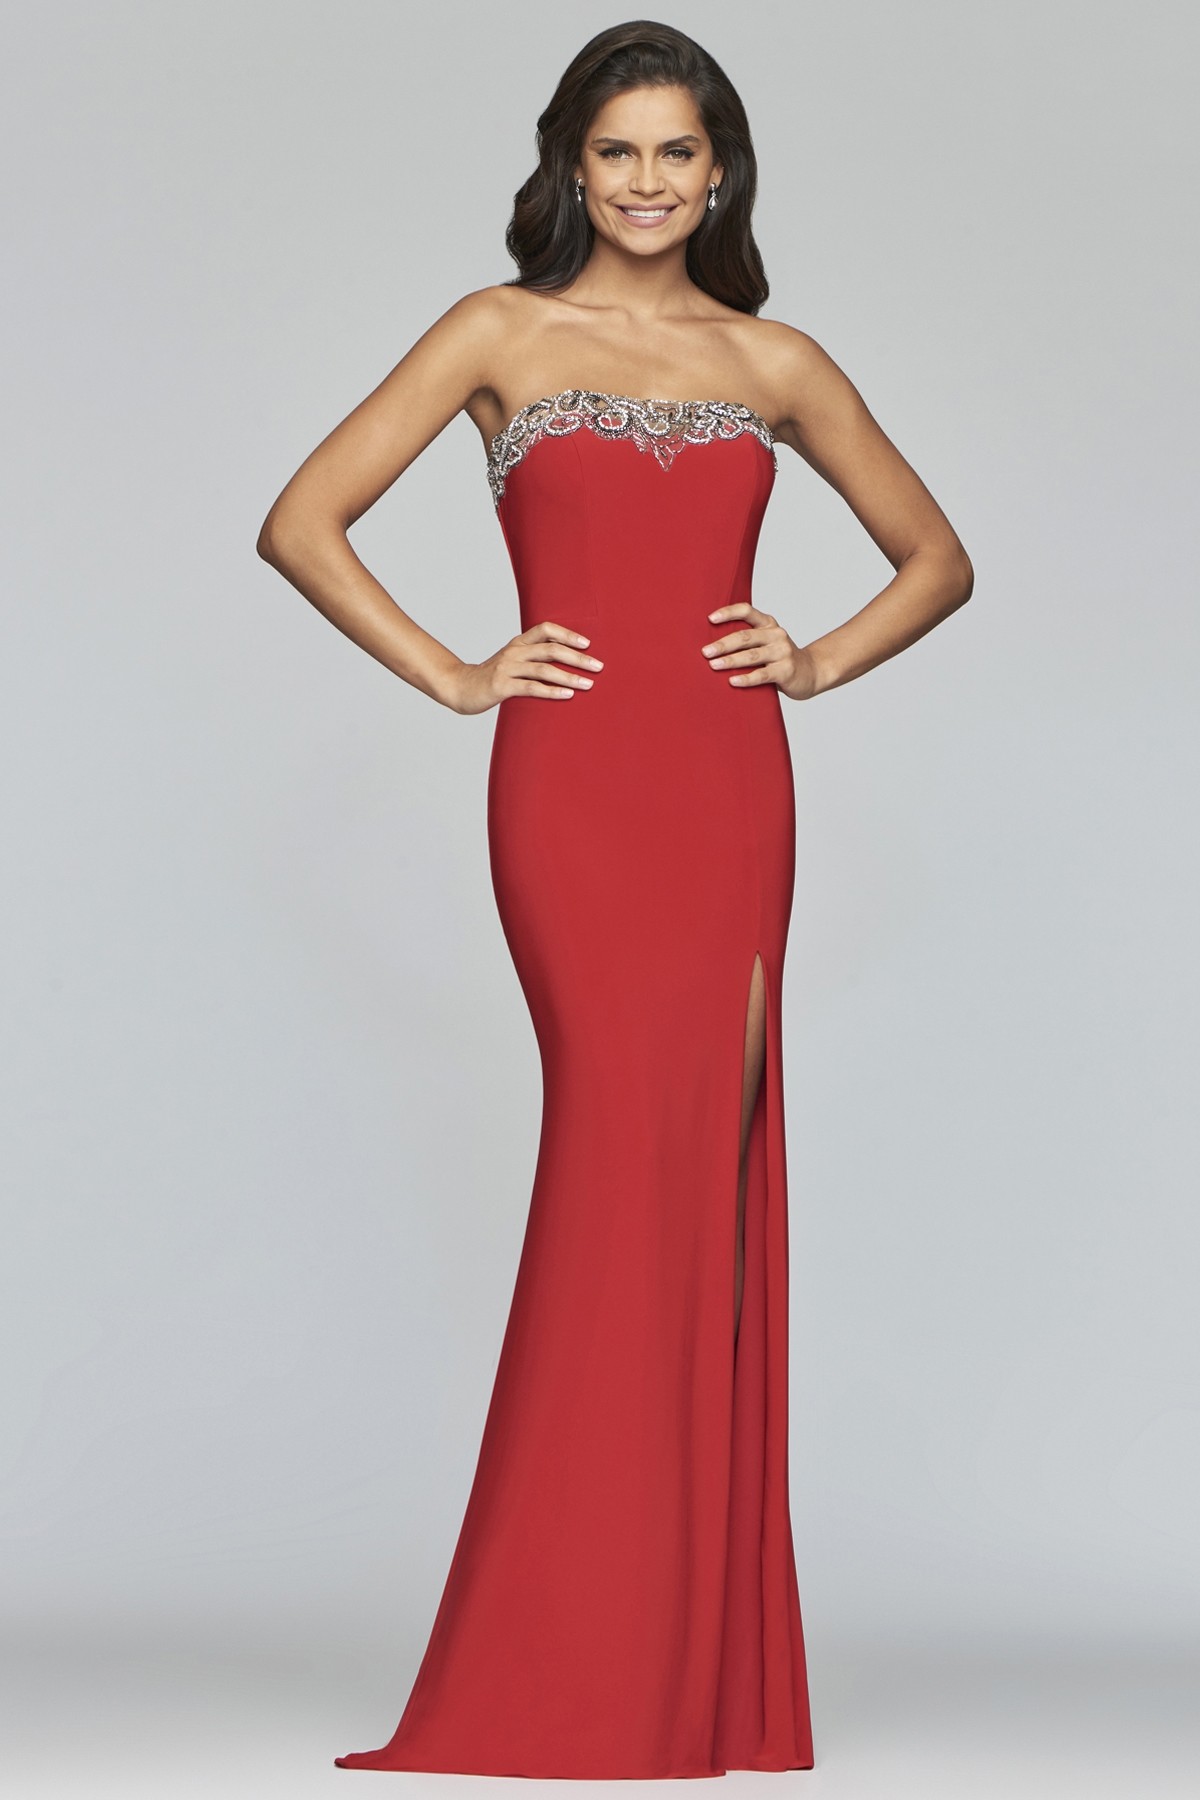 Faviana S10200 Prom Dress